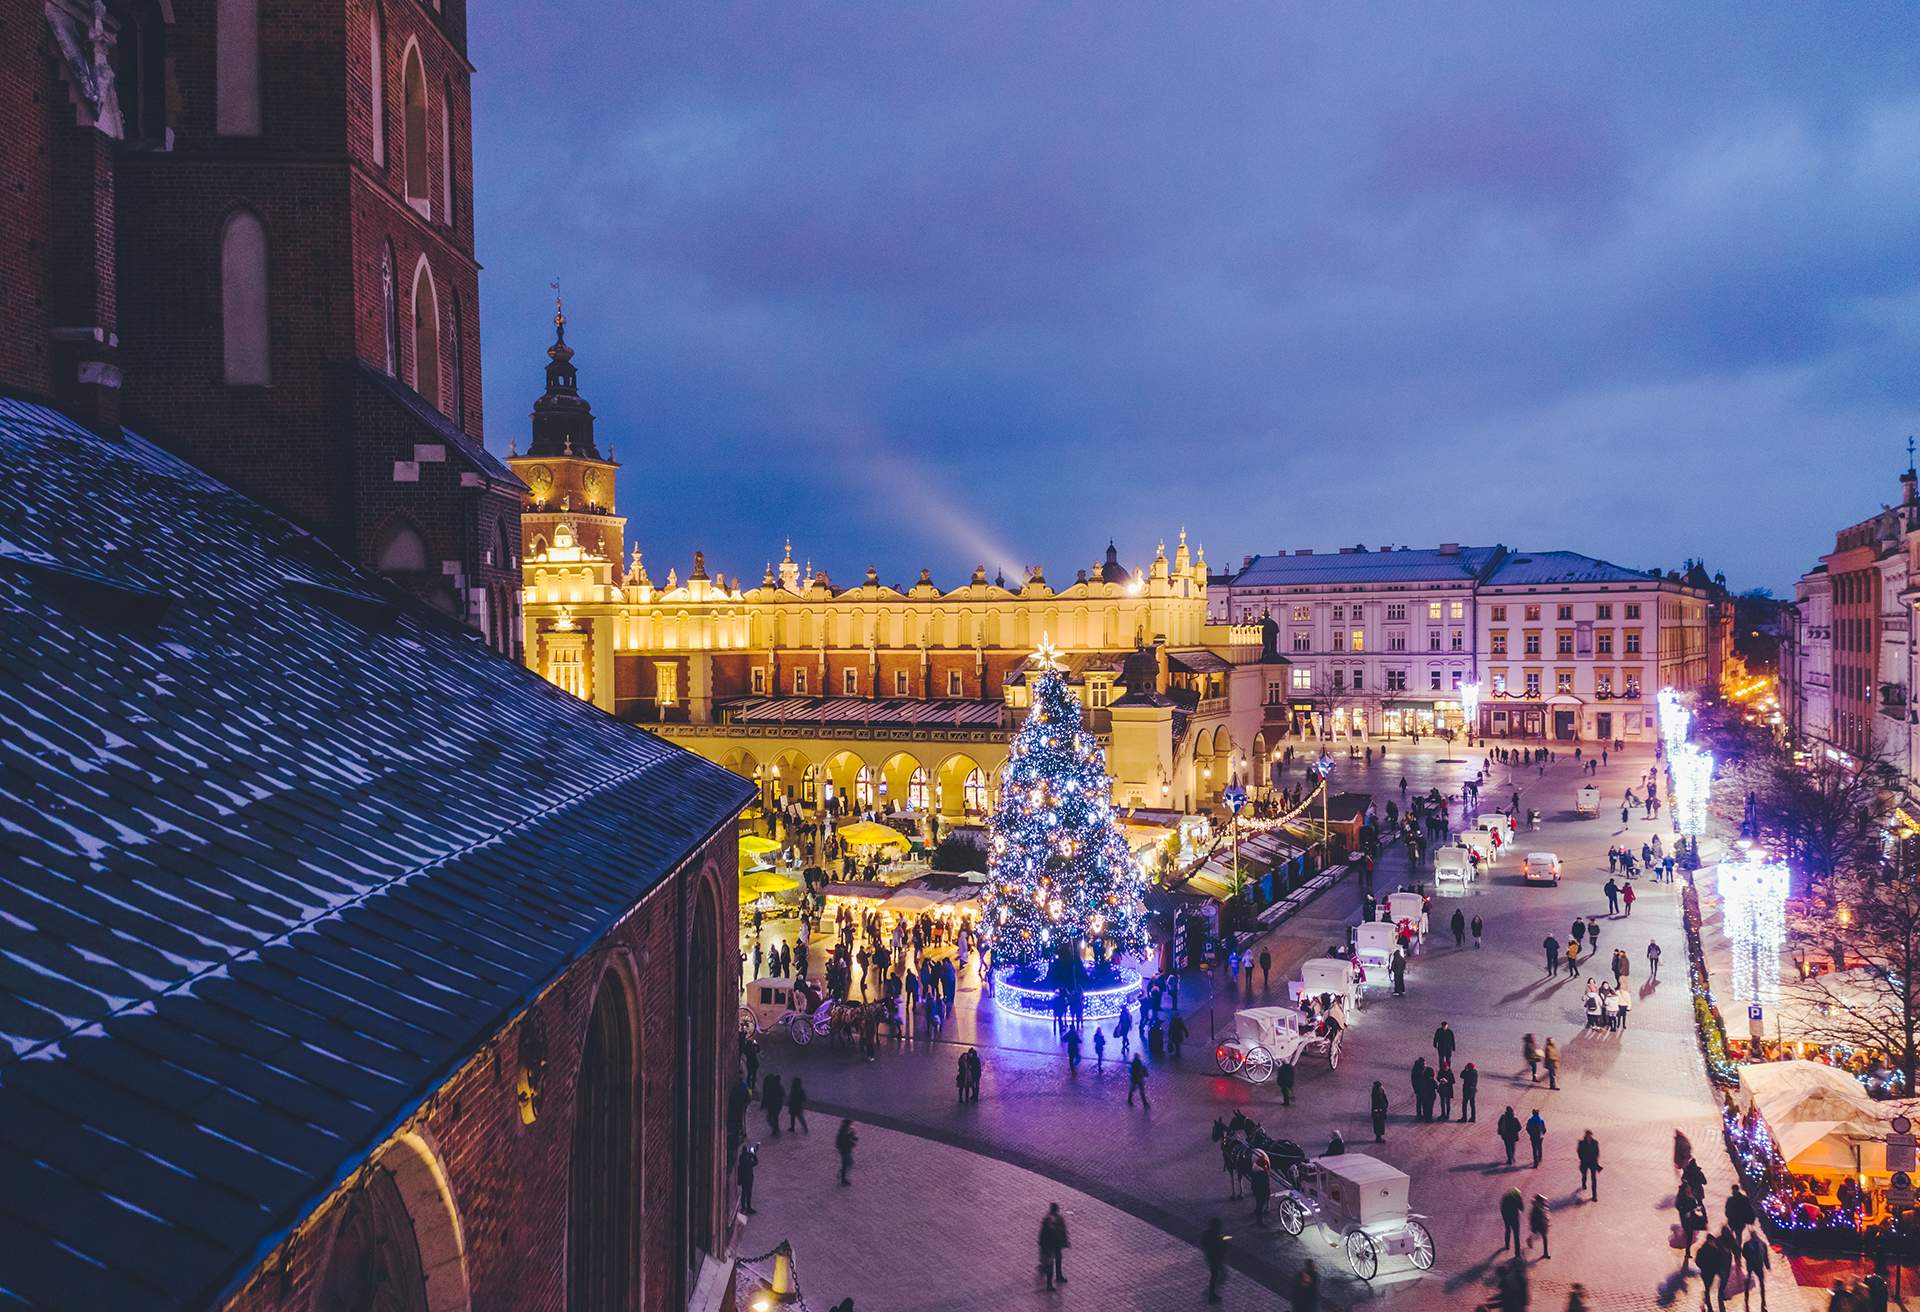 dest_poland_krakow_winter_christmas-market_gettyimages-1171183975